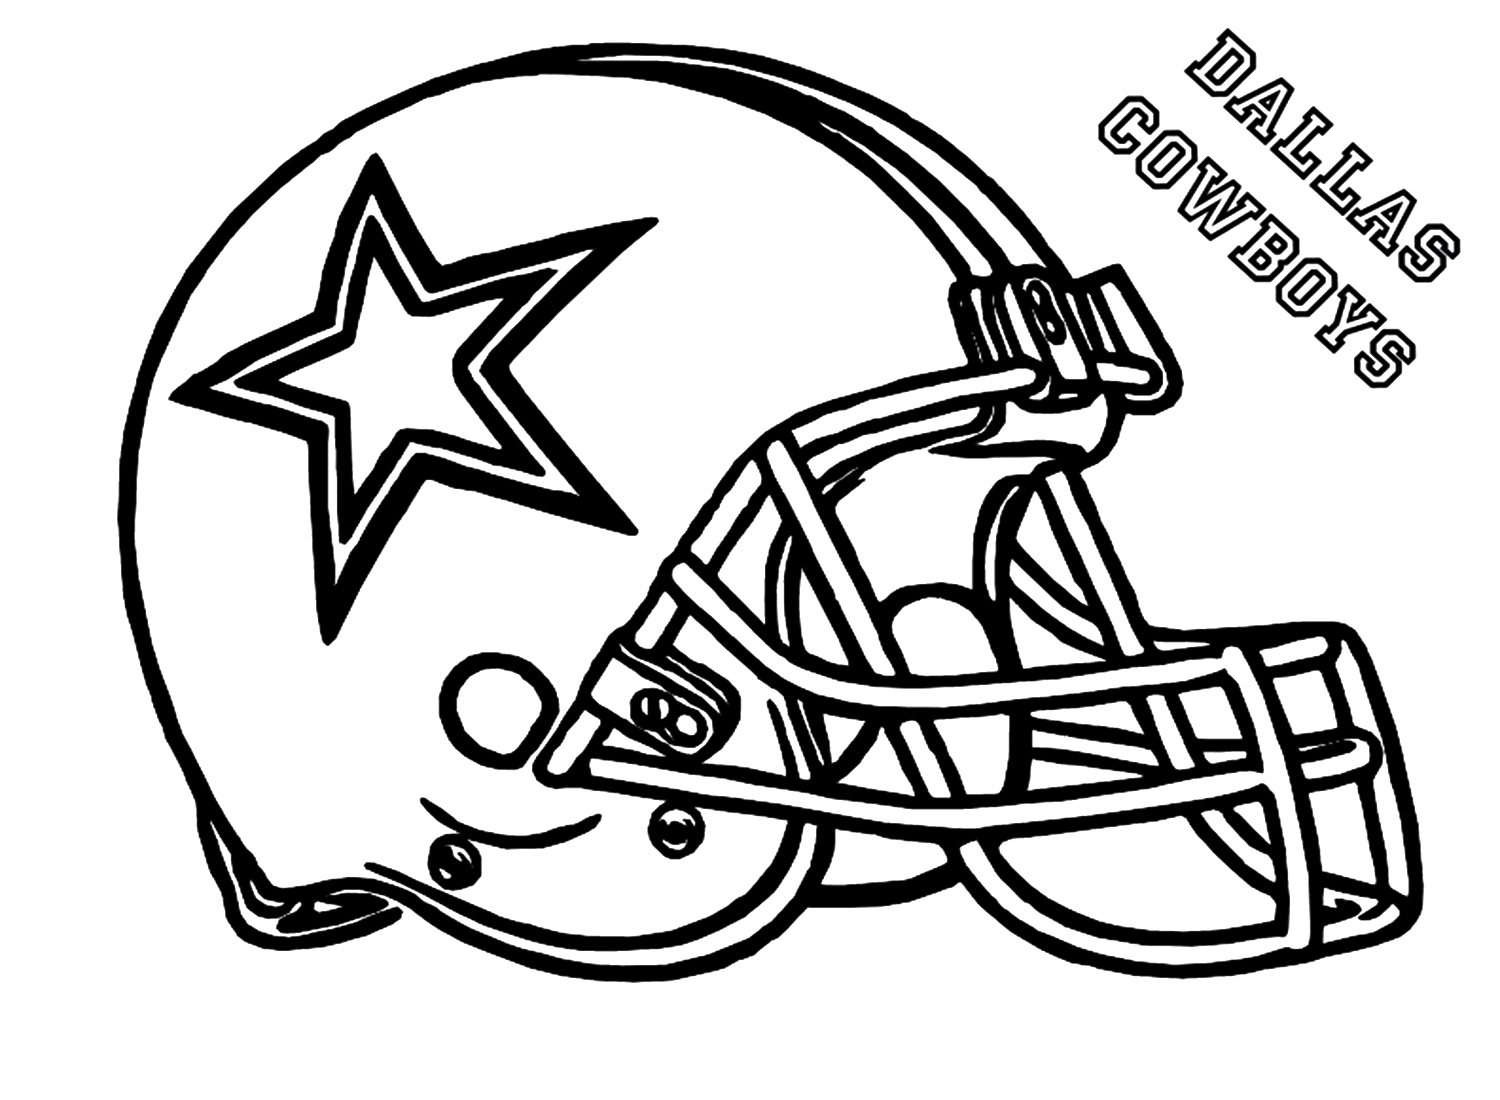 Anti-Skull Cracker Football Helmet Coloring Pages